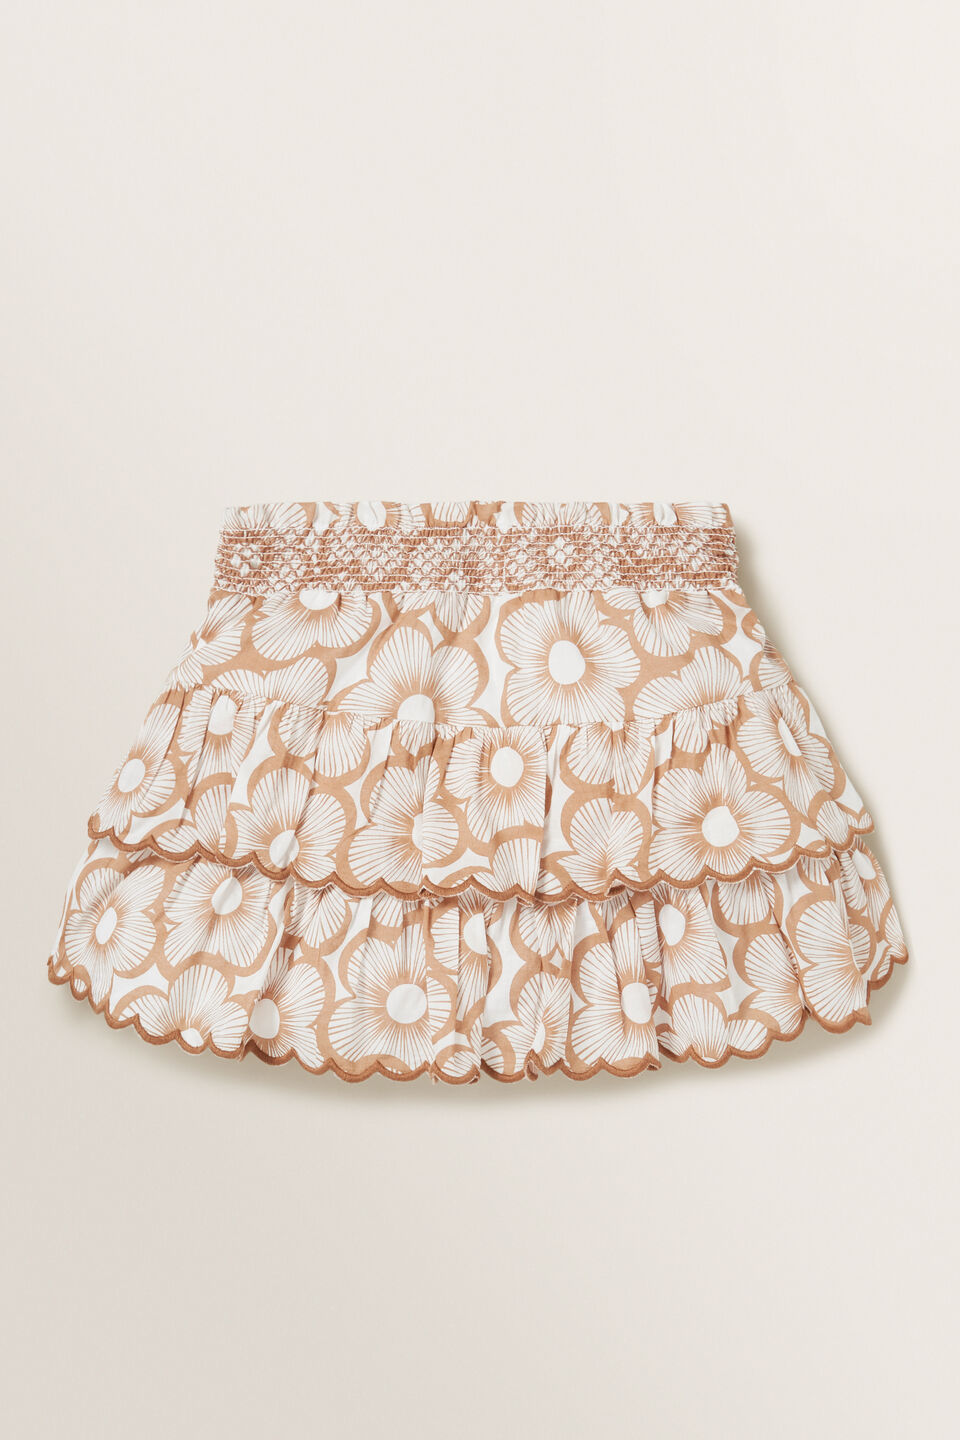 Shirred Floral Skirt  Biscuit